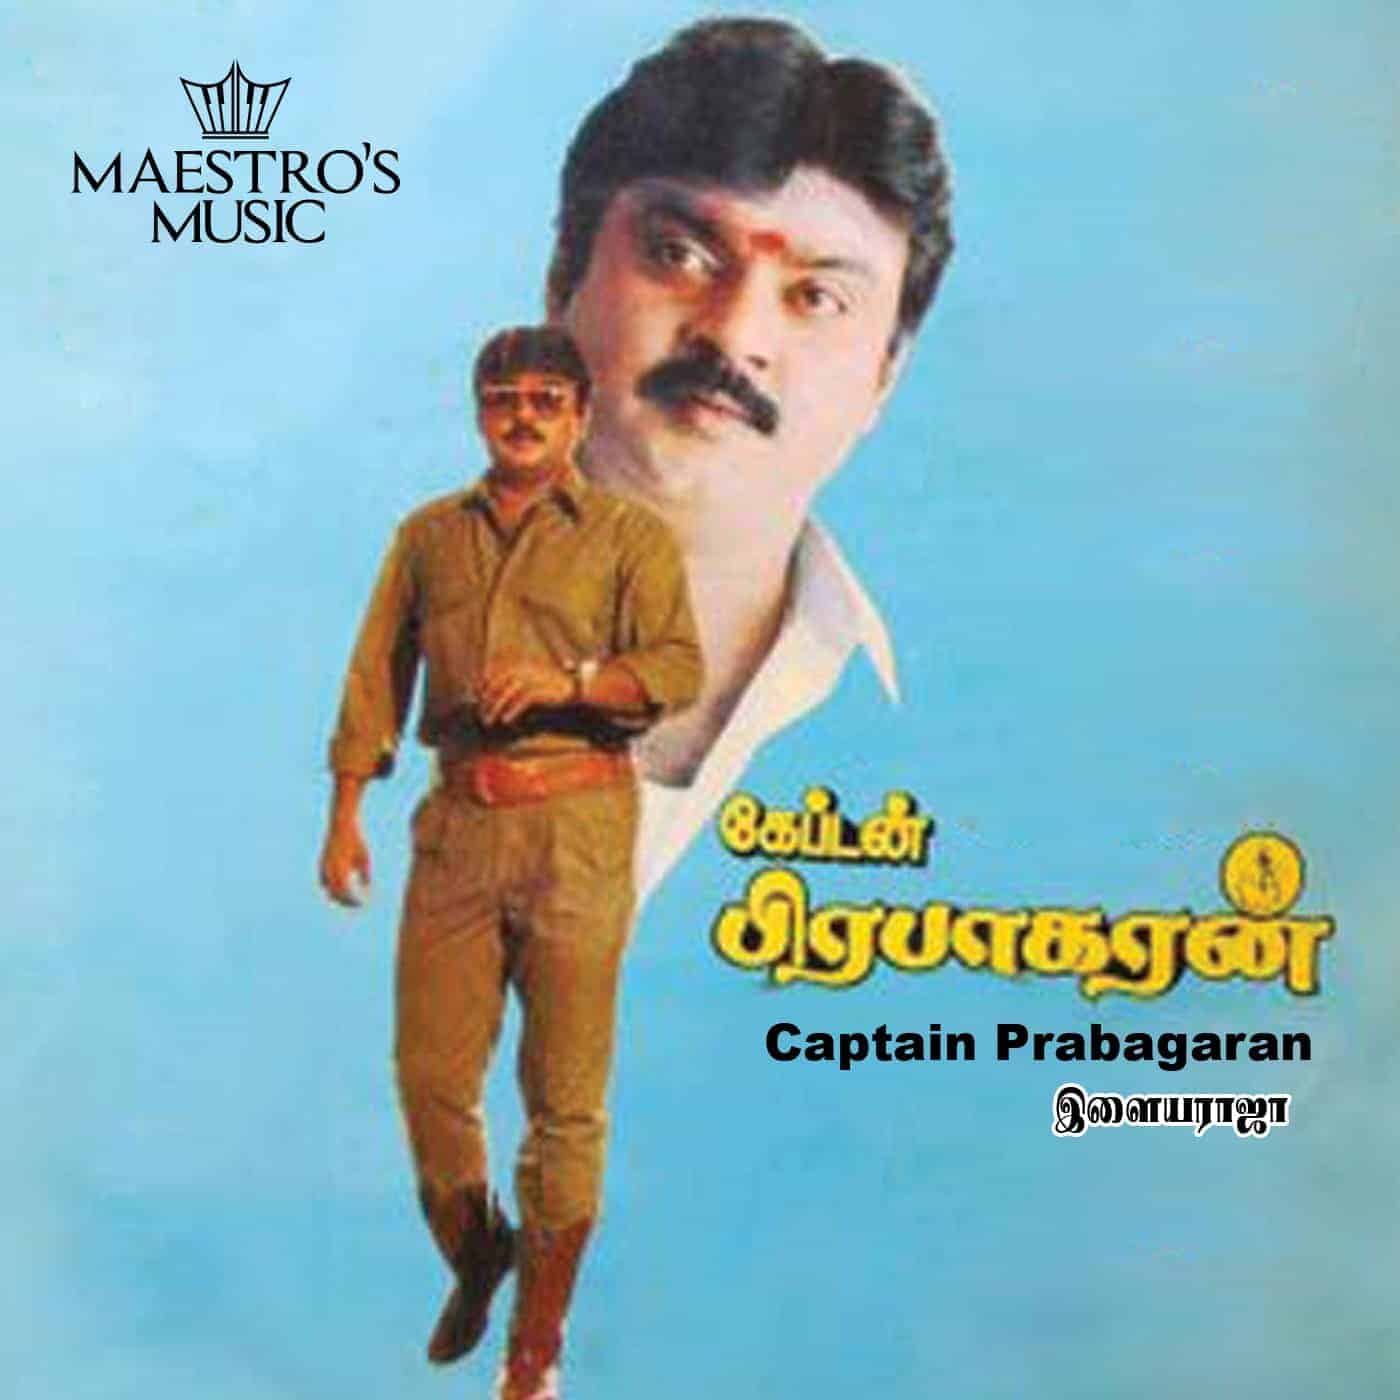 Captain Prabhakaran 2011 Tamil Action Movie Online